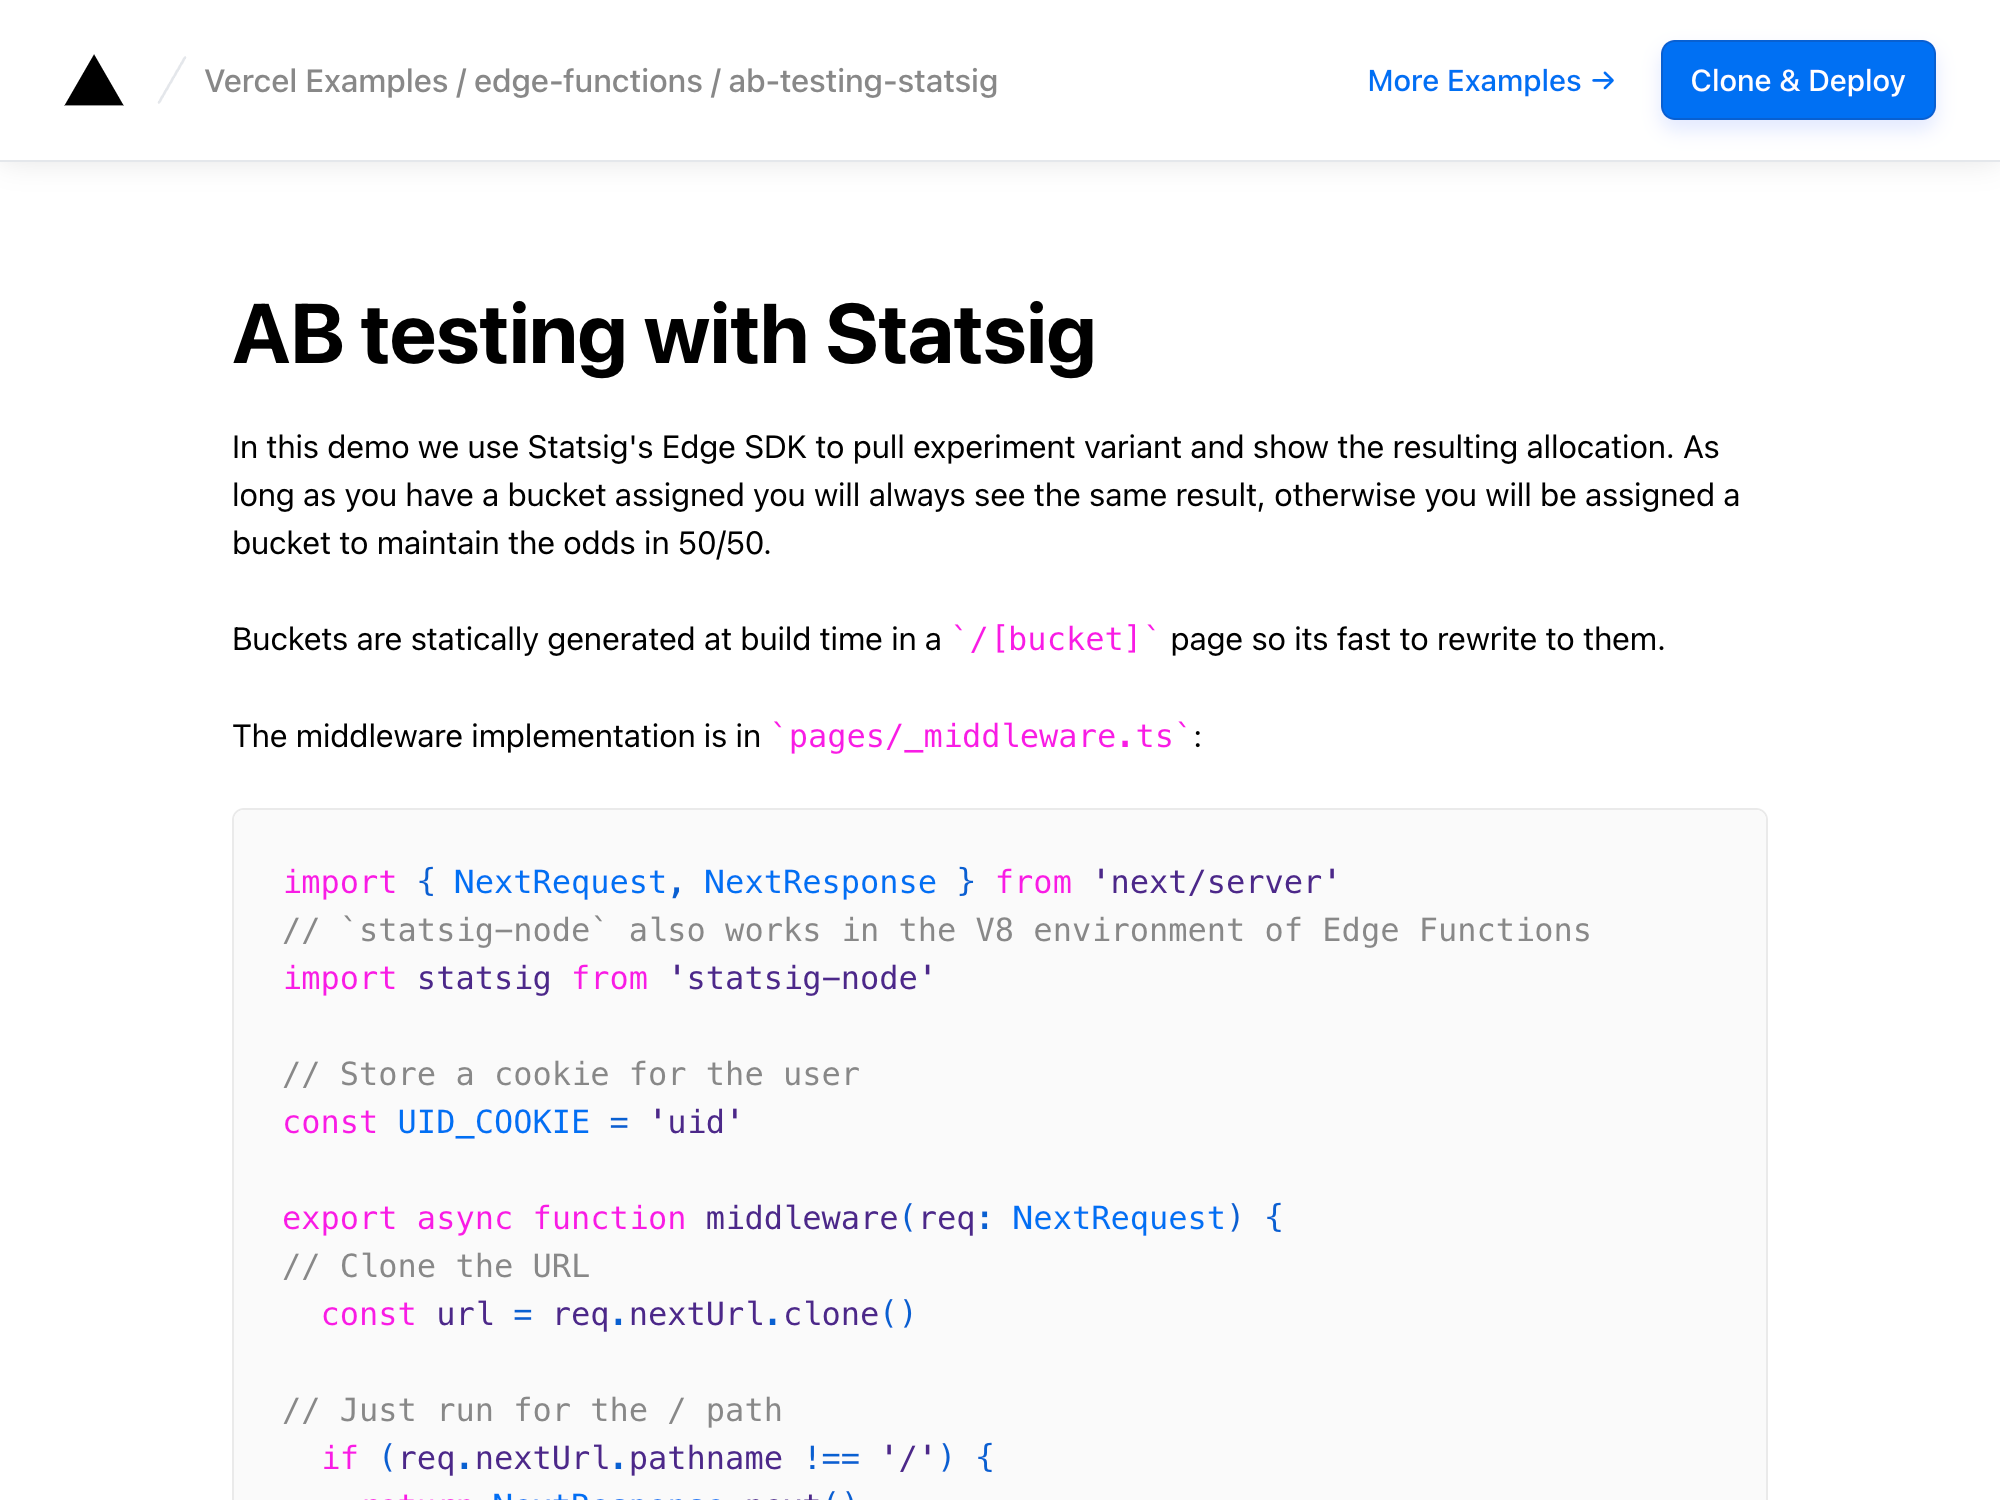 A/B testing with Statsig